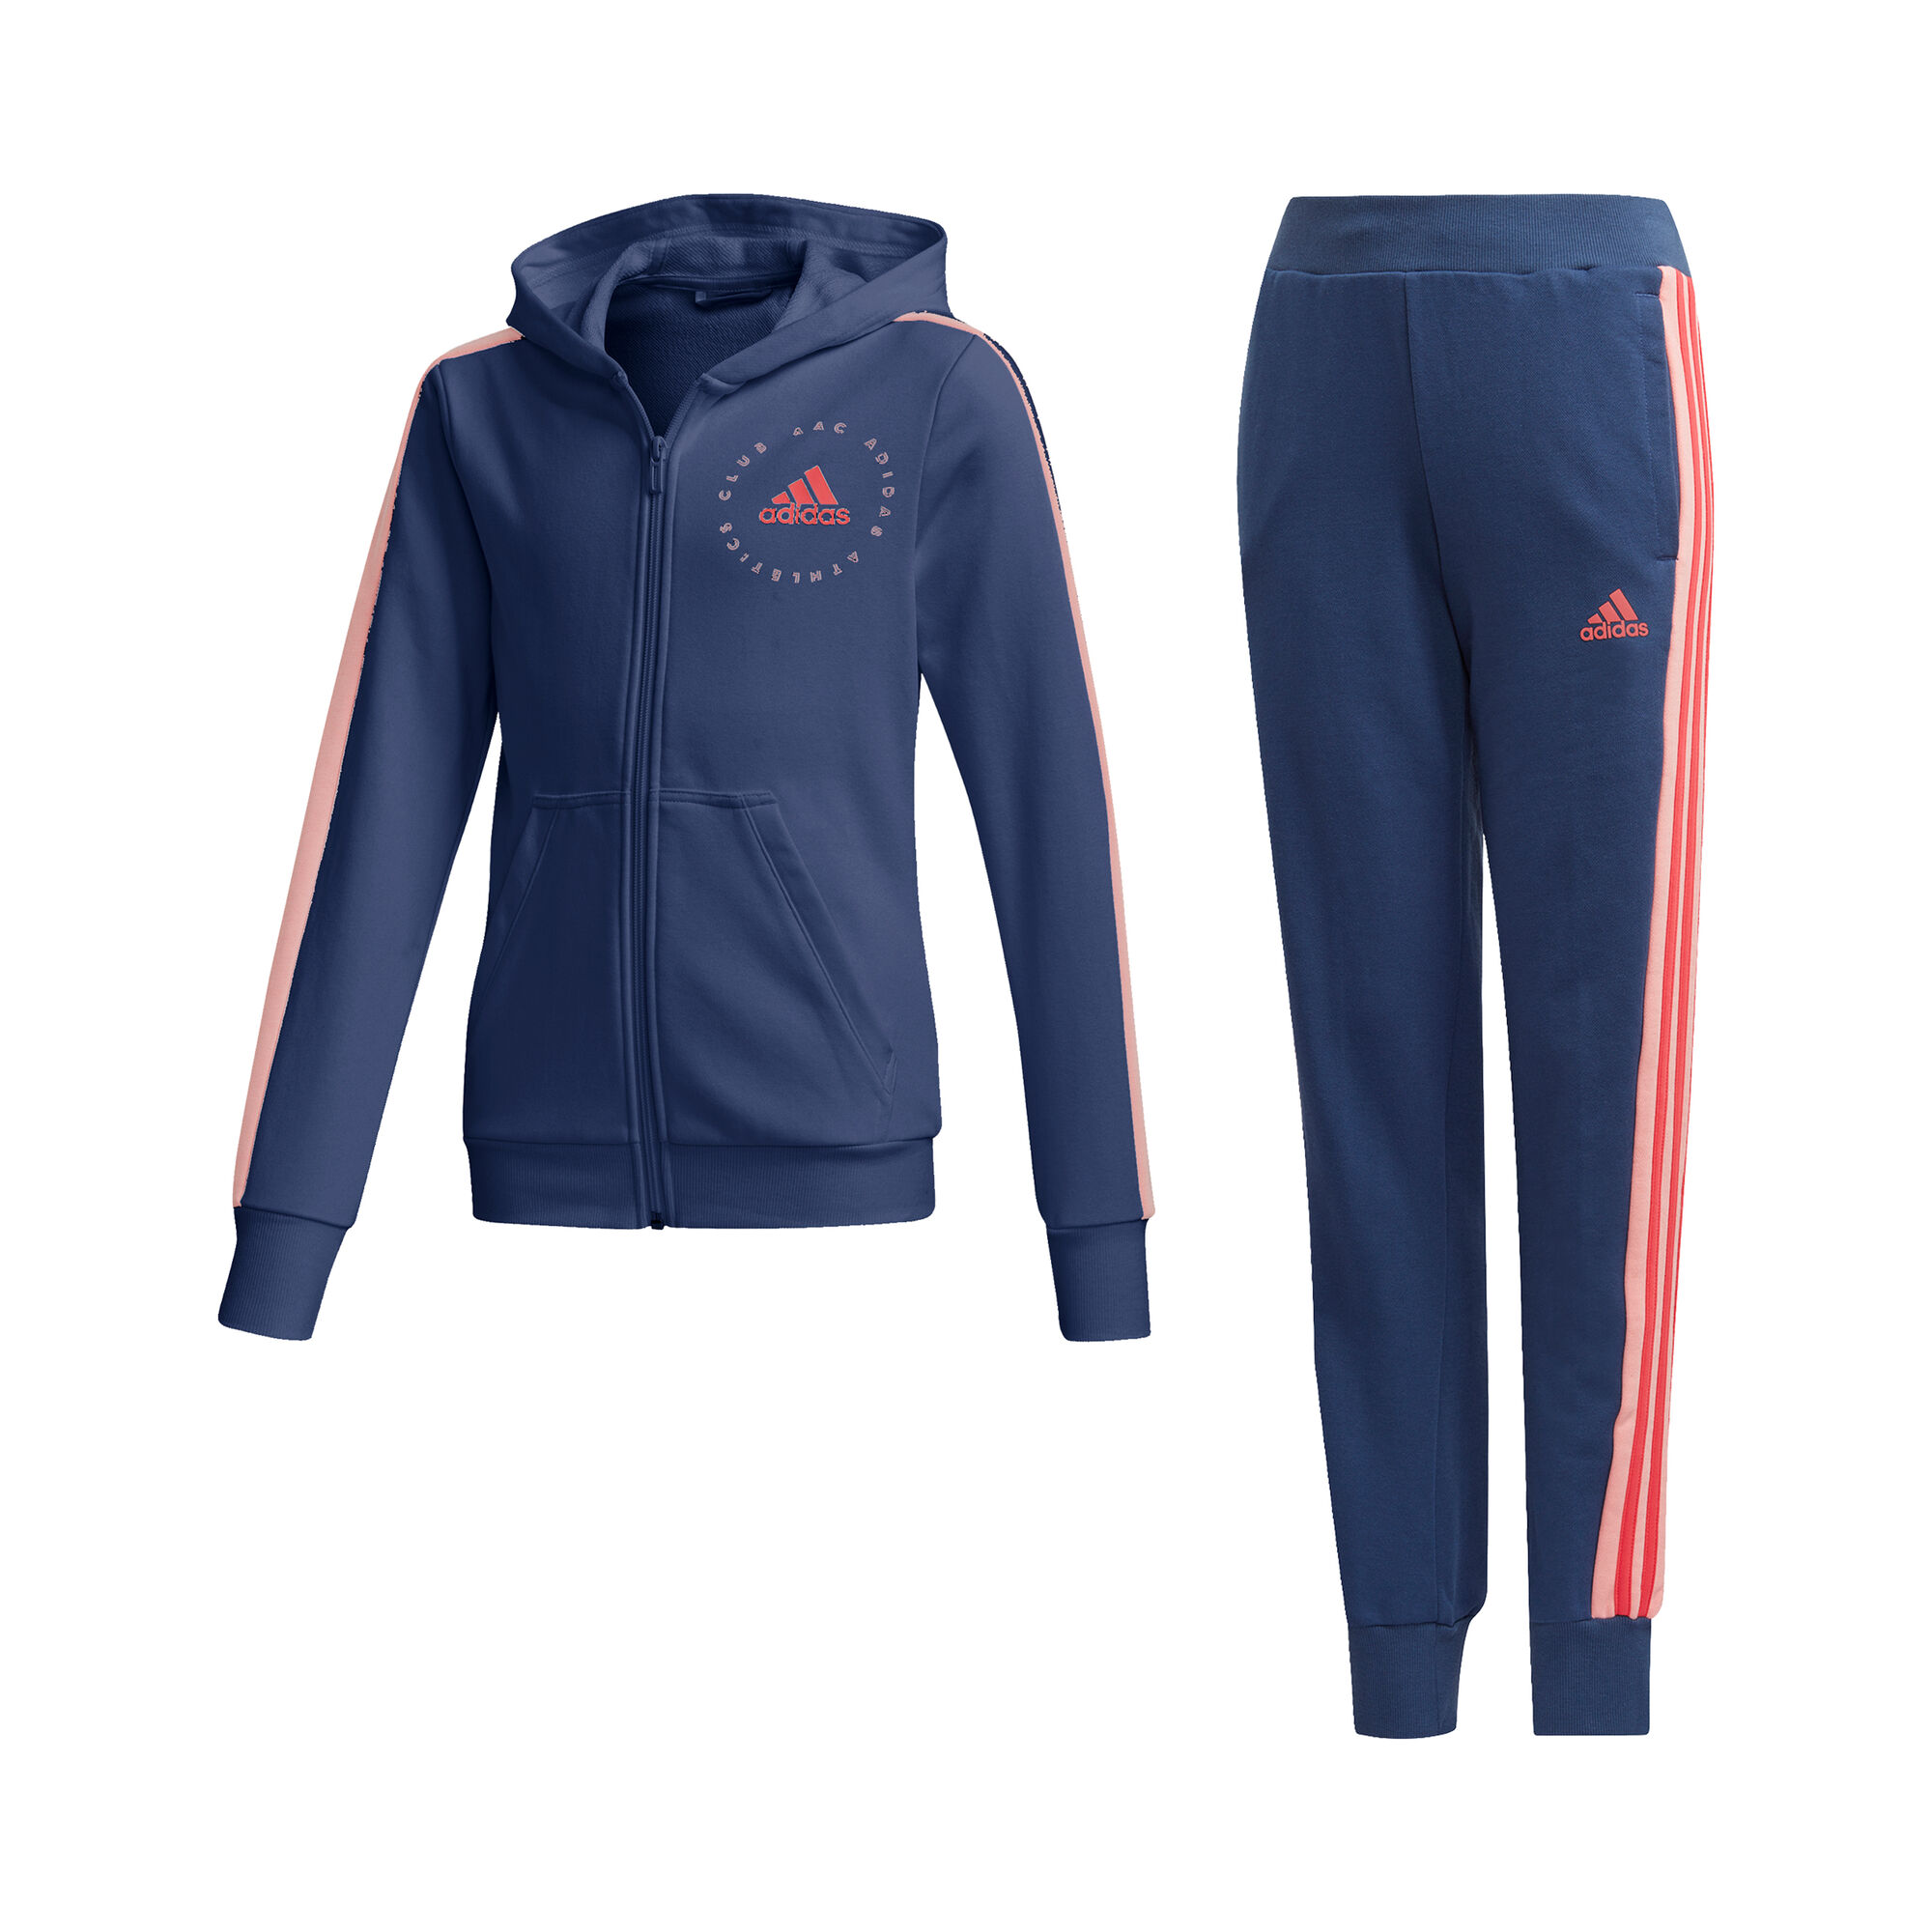 mosterd ethiek Gevoelig voor adidas Hooded Trainingspak Meisjes - Donkerblauw, Pink online kopen |  Tennis-Point